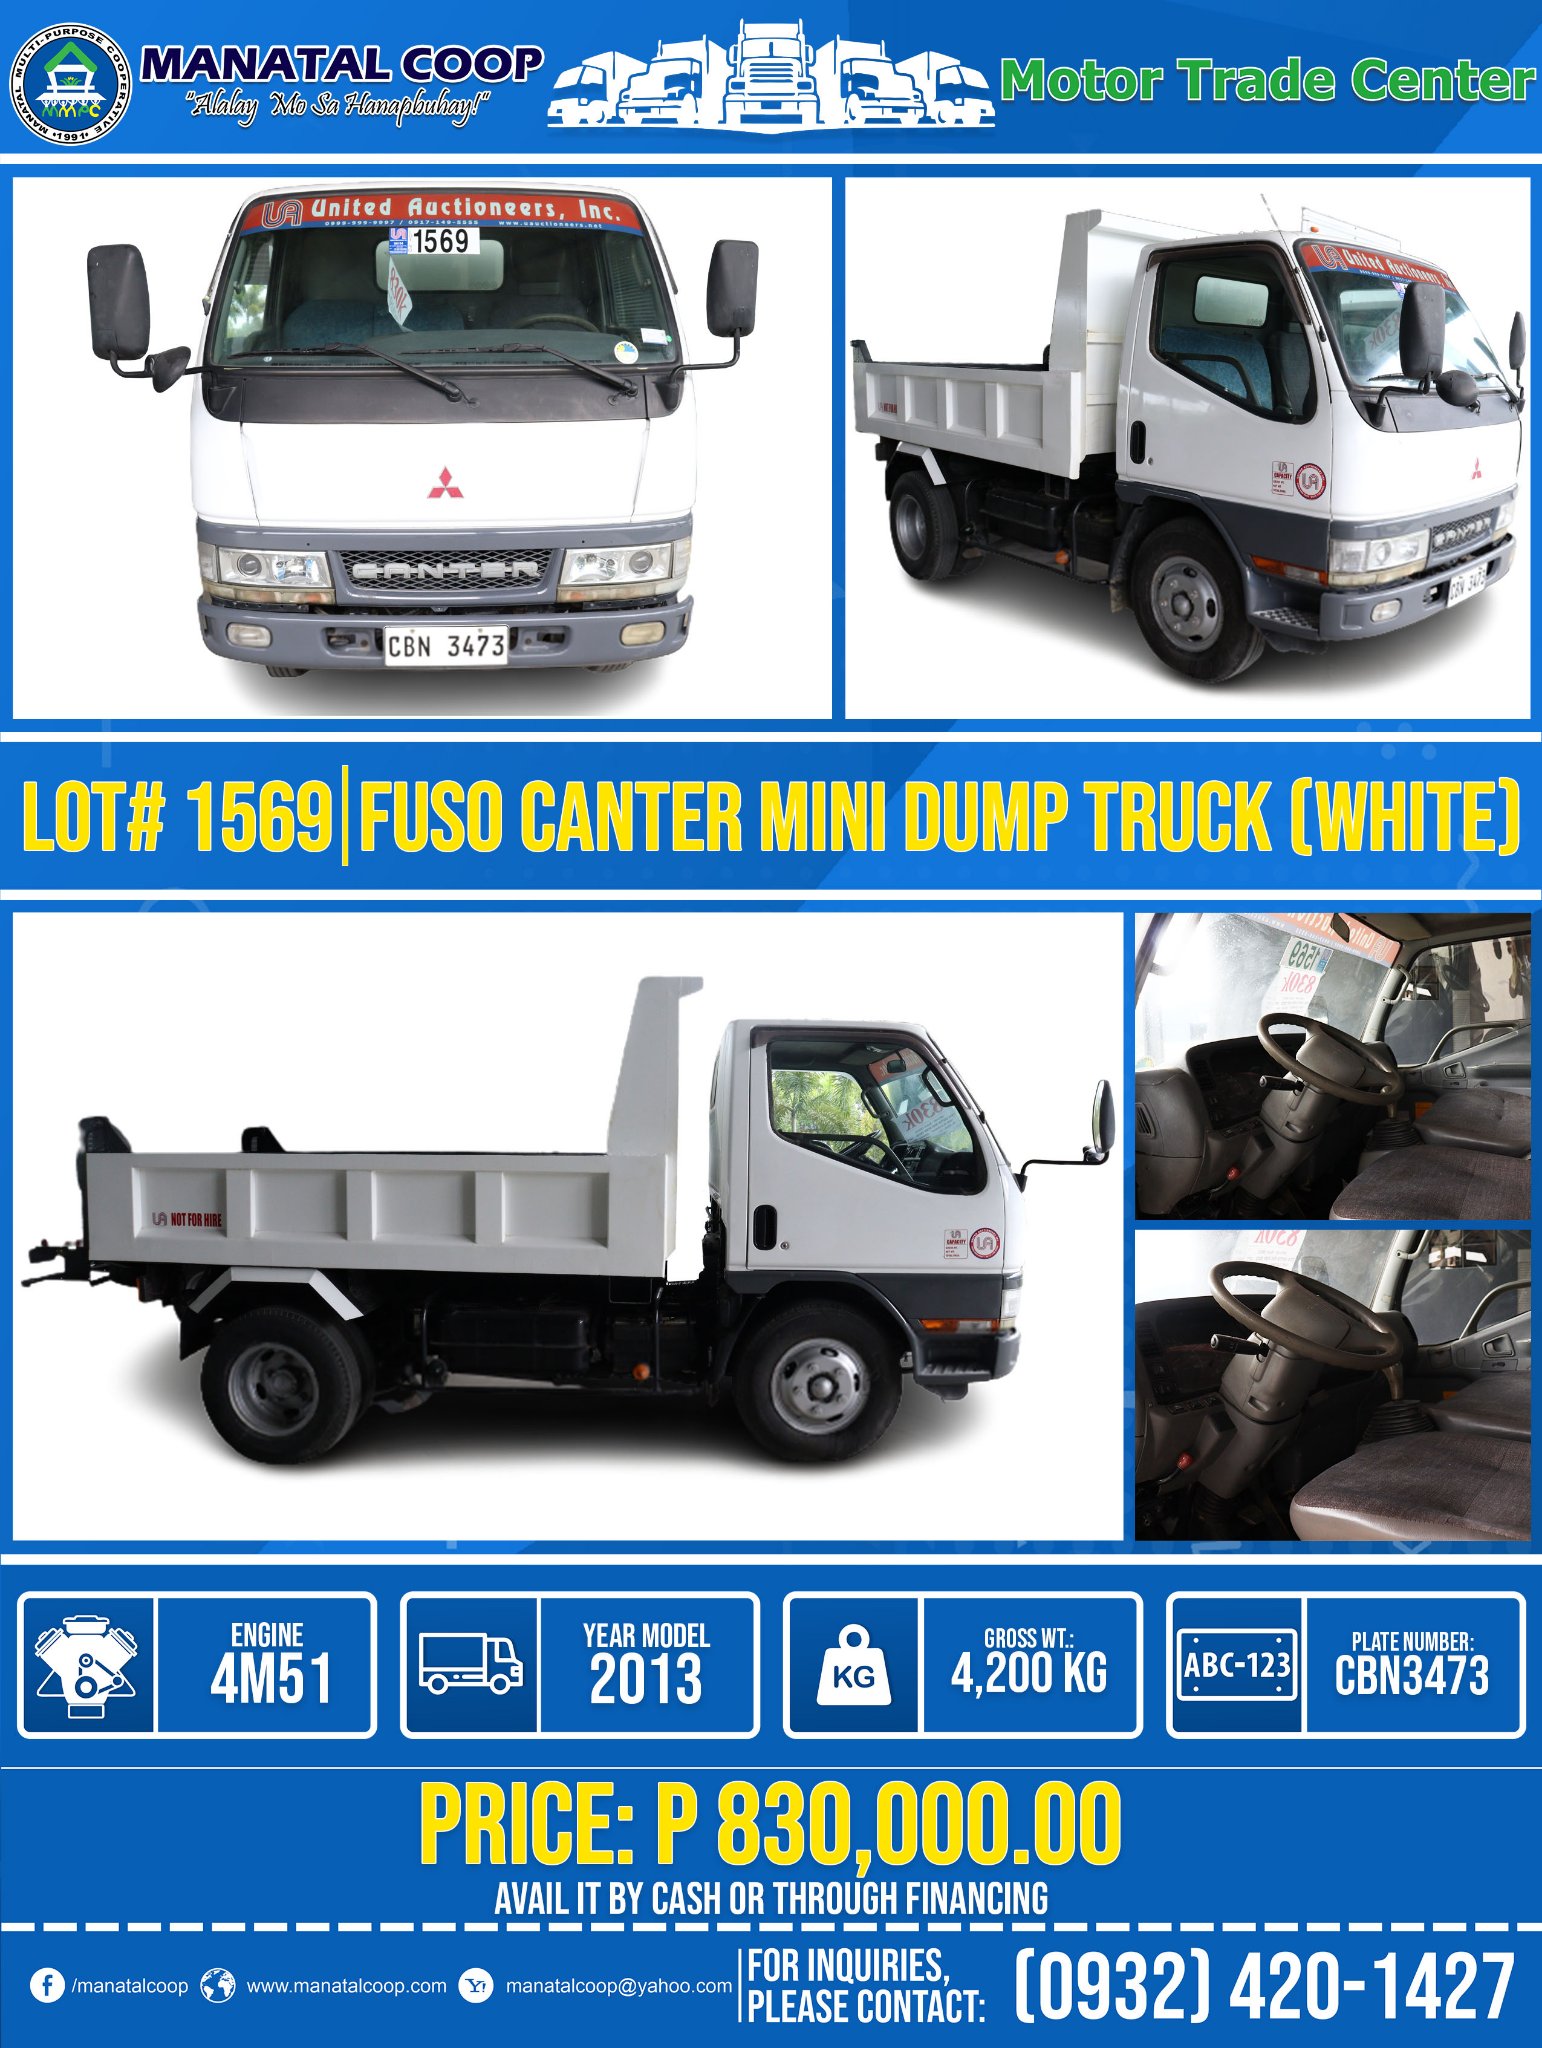 Lot# 1569 Fuso Canter Mini Dump Truck - White